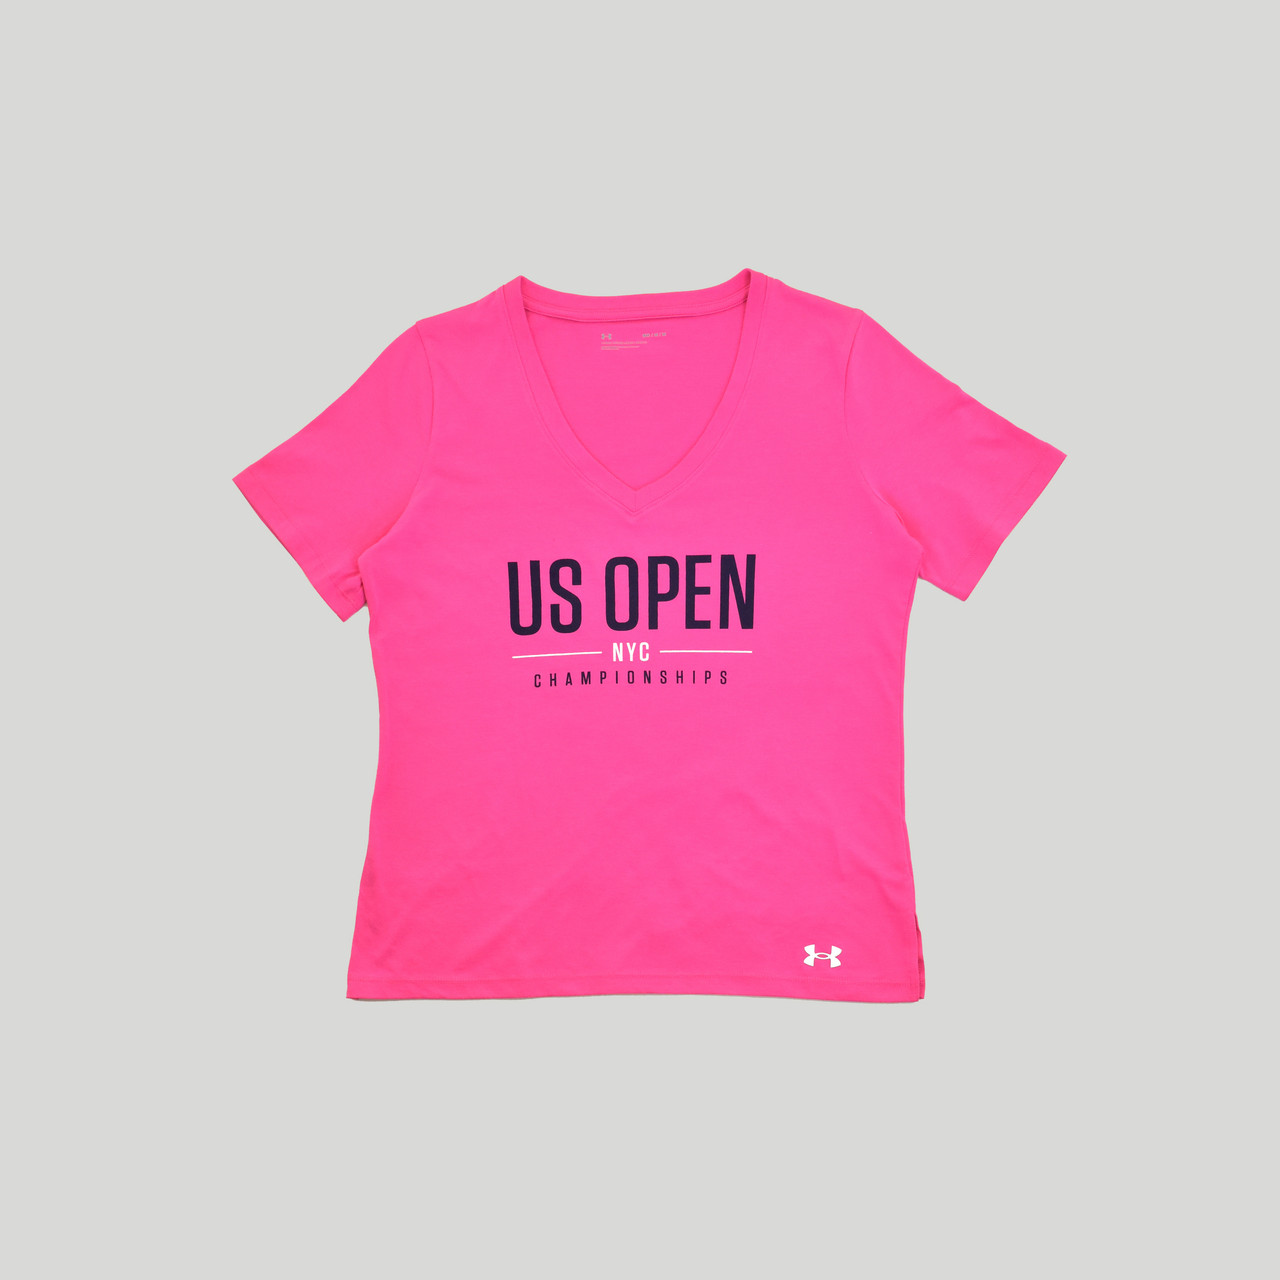 US Open Under Armour Women's V-neck T-Shirt - Pink - US Open Shop